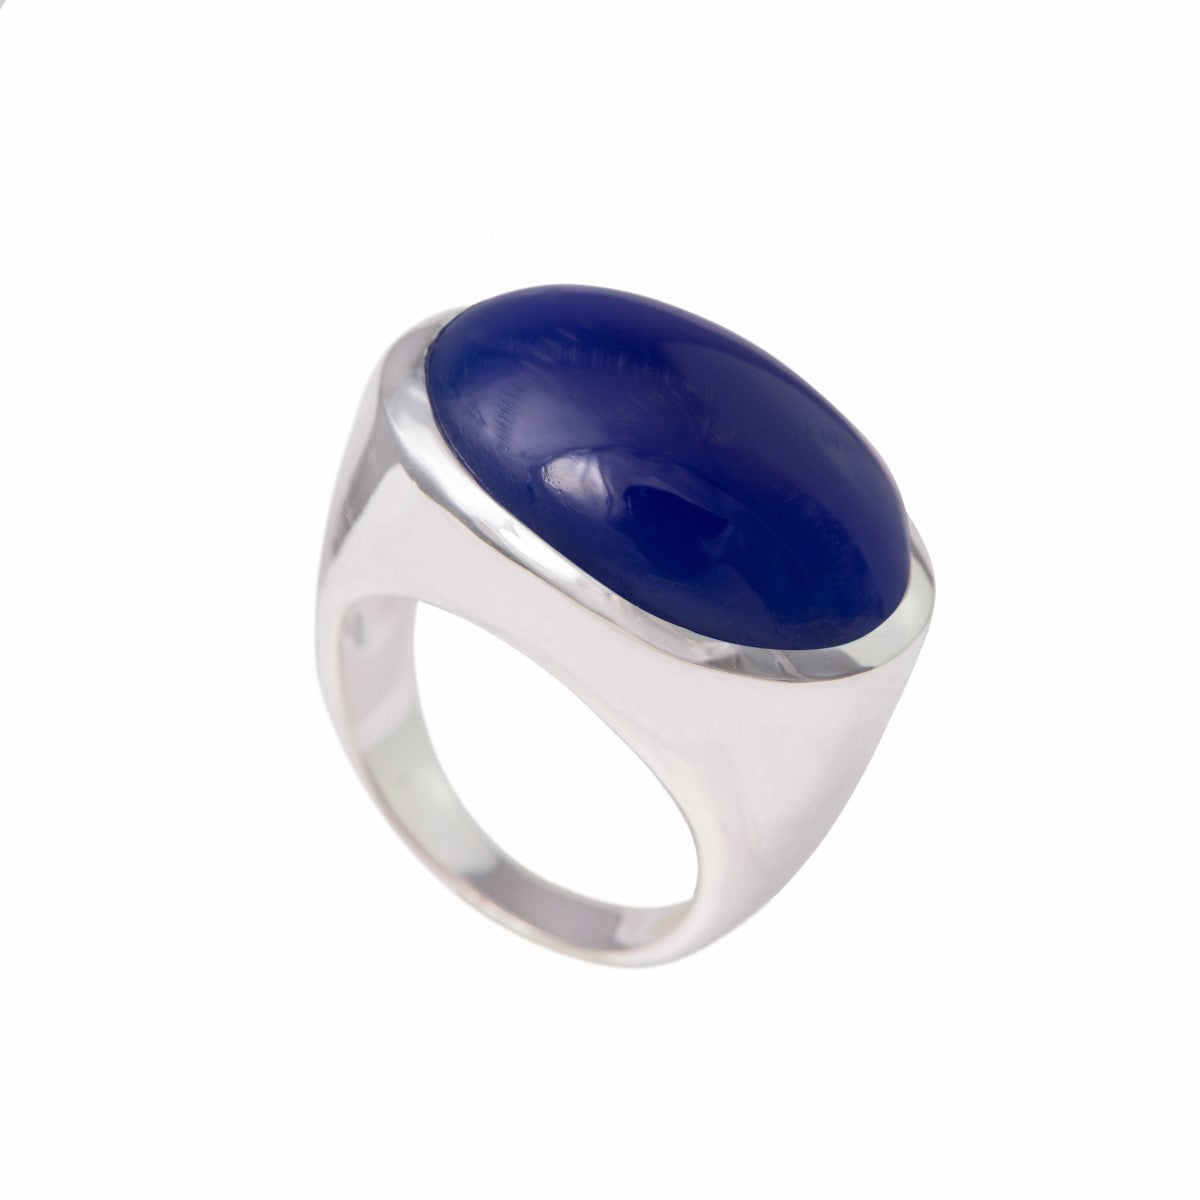 Statement Sterling Silver Blue Chalcedony Gemstone Ring